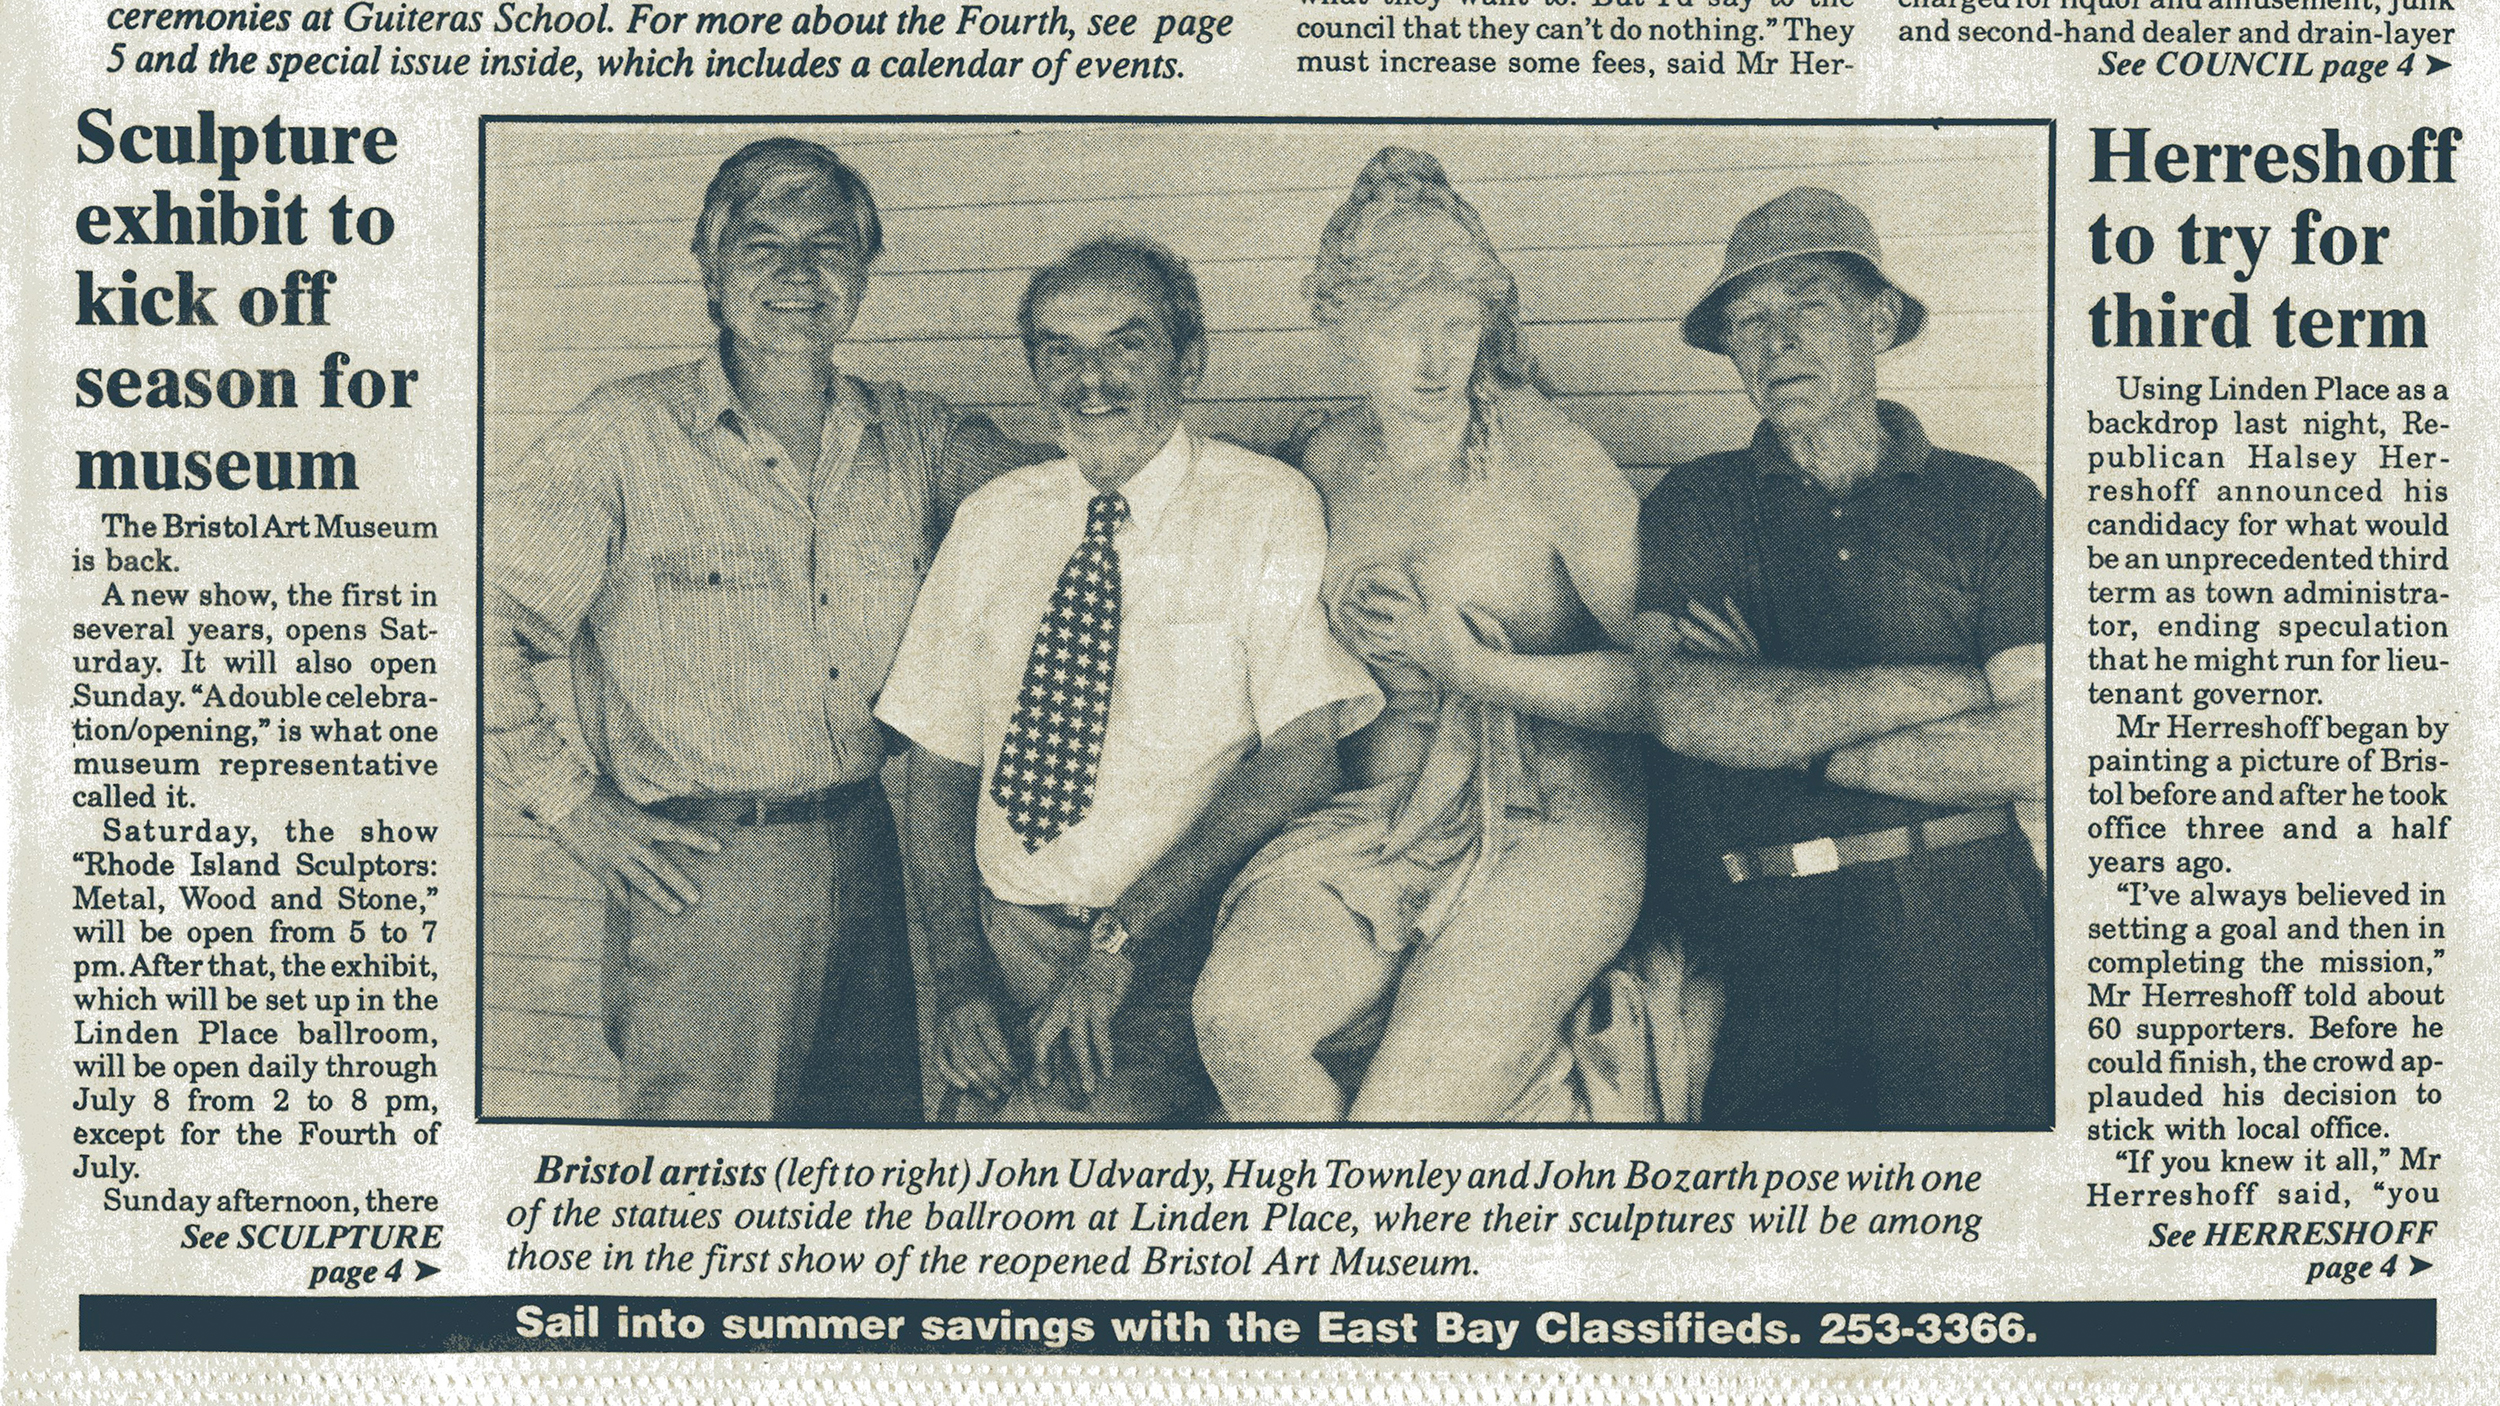   JU with sculptors and colleagues Hugh Townley, John Bozarth and Aphrodite at the Bristol Art Museum, Bristol Phoenix Newspaper, June 21, 1990  